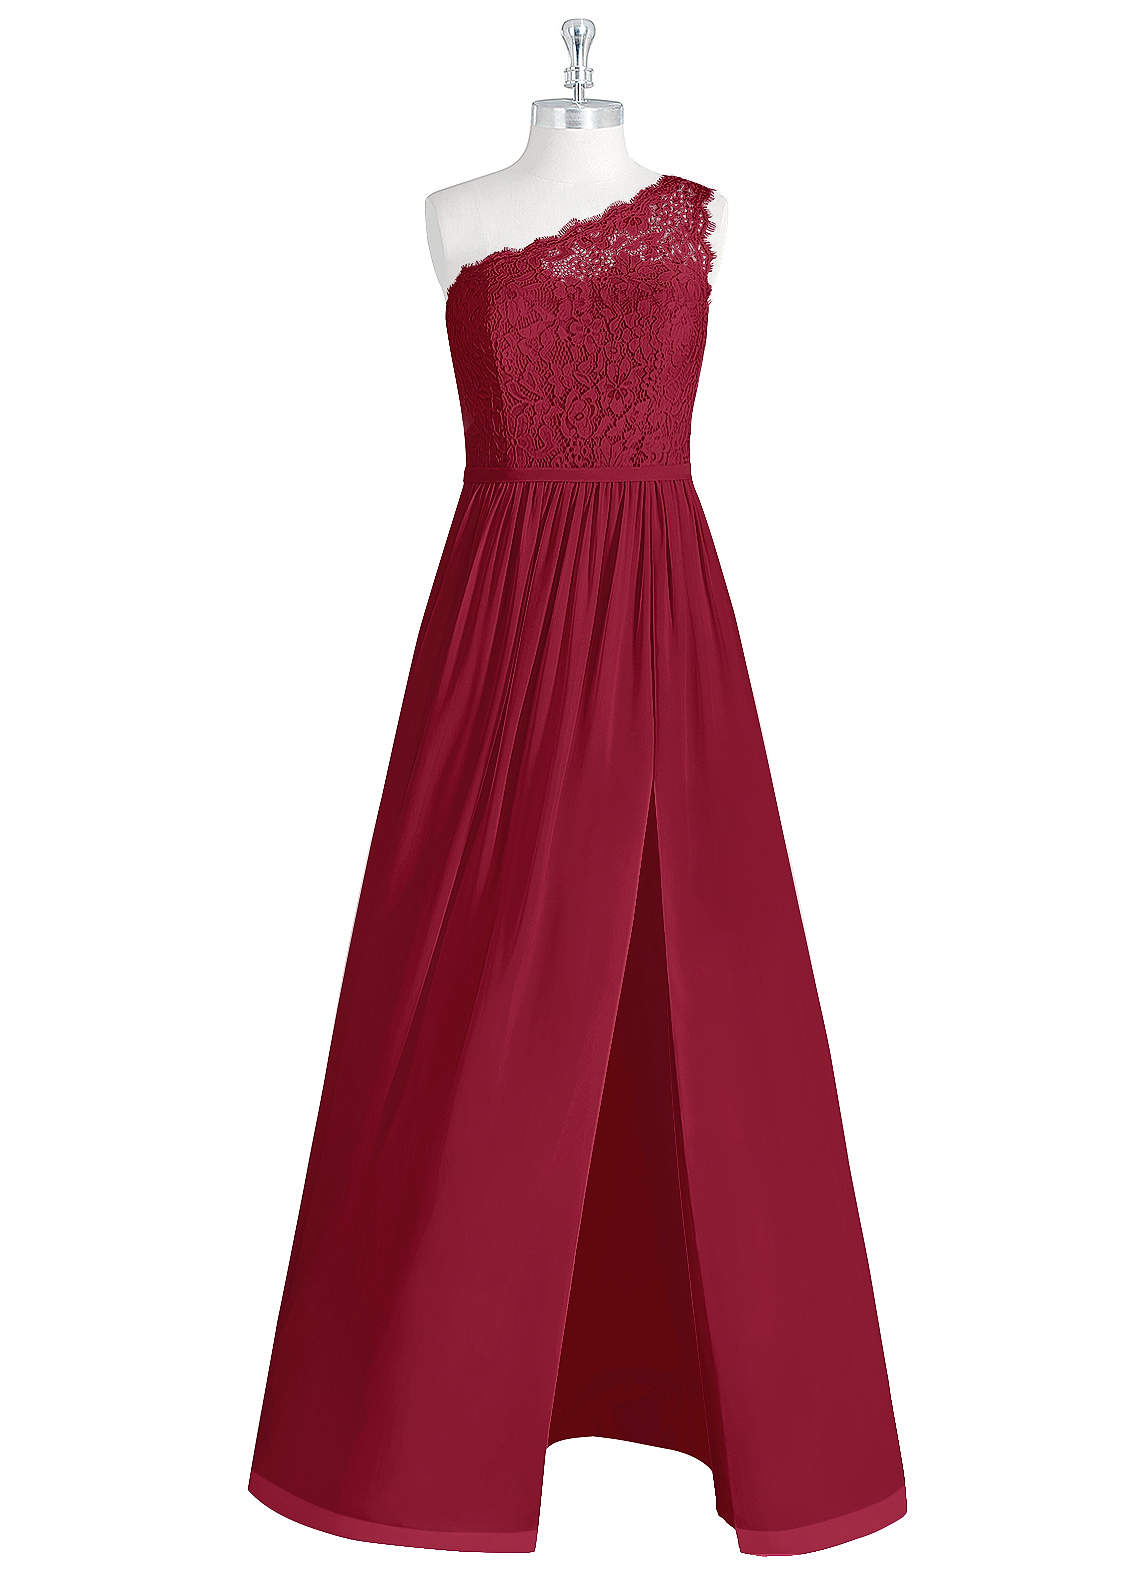 Azazie Demi Bridesmaid Dresses A-Line One Shoulder Chiffon Floor-Length Dress image1